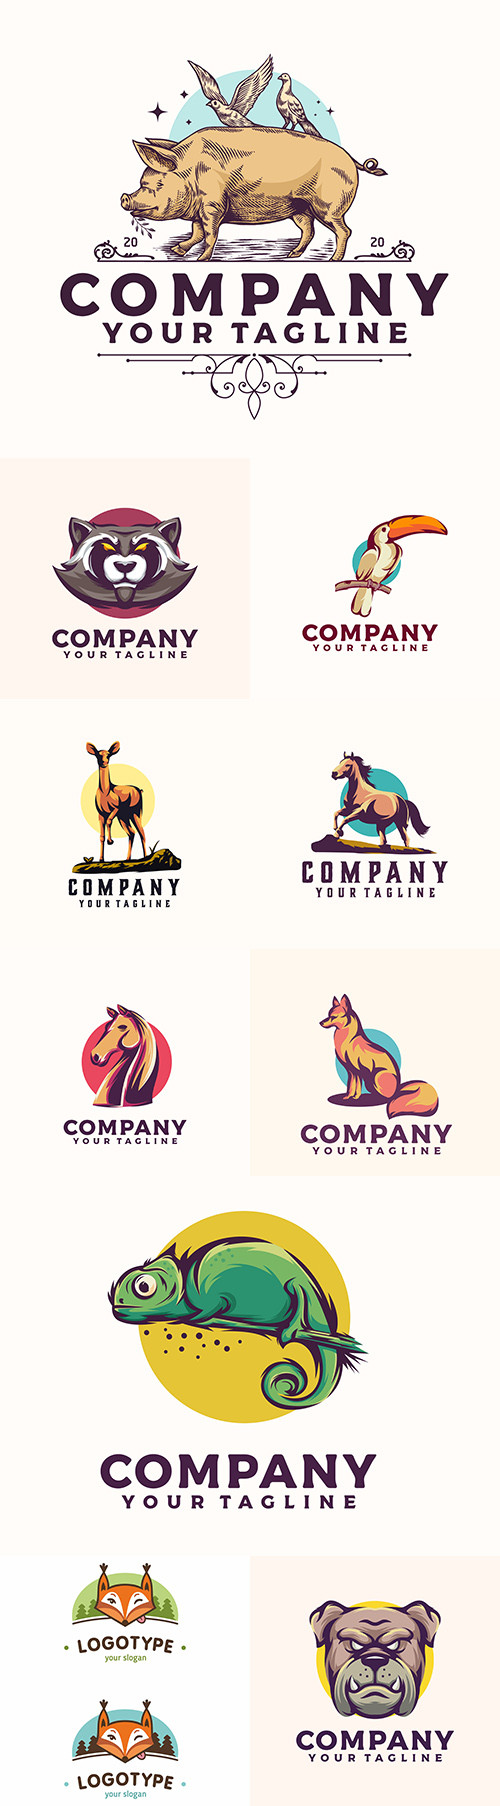 Brand name company logos business corporate design 64
